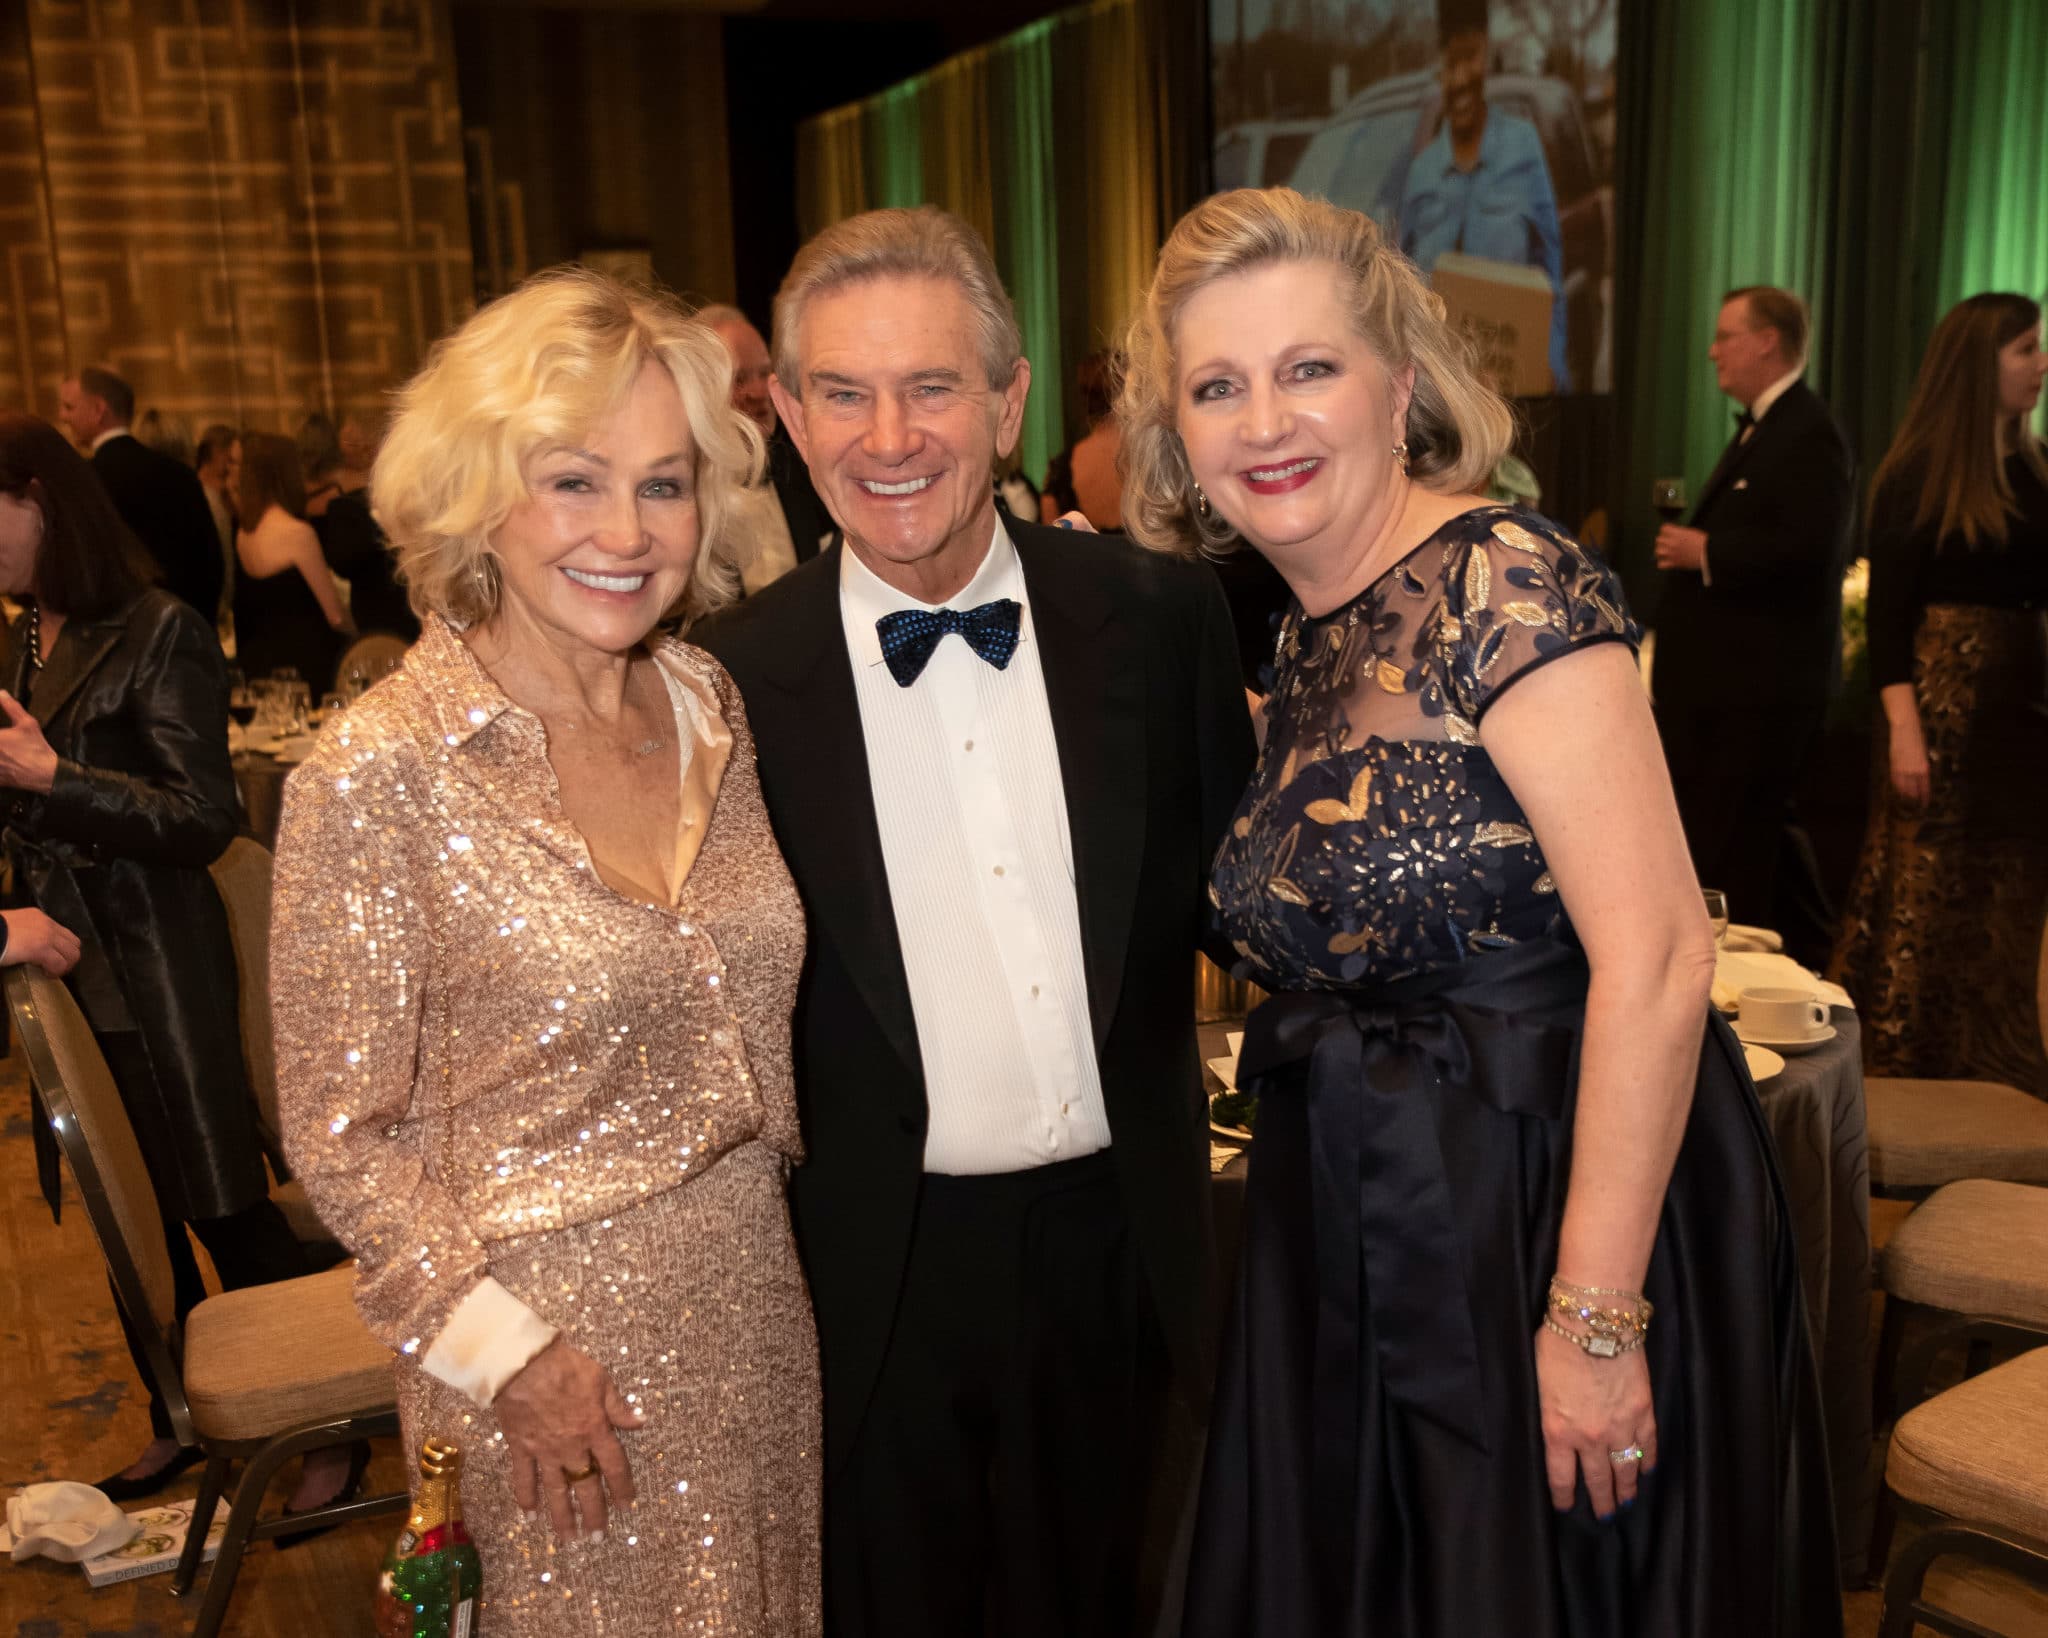 North Texas Food Bank founder, Kathryn Hall with her husband, Craig Hall, and NTFB President and CEO, Trisha Cunningham